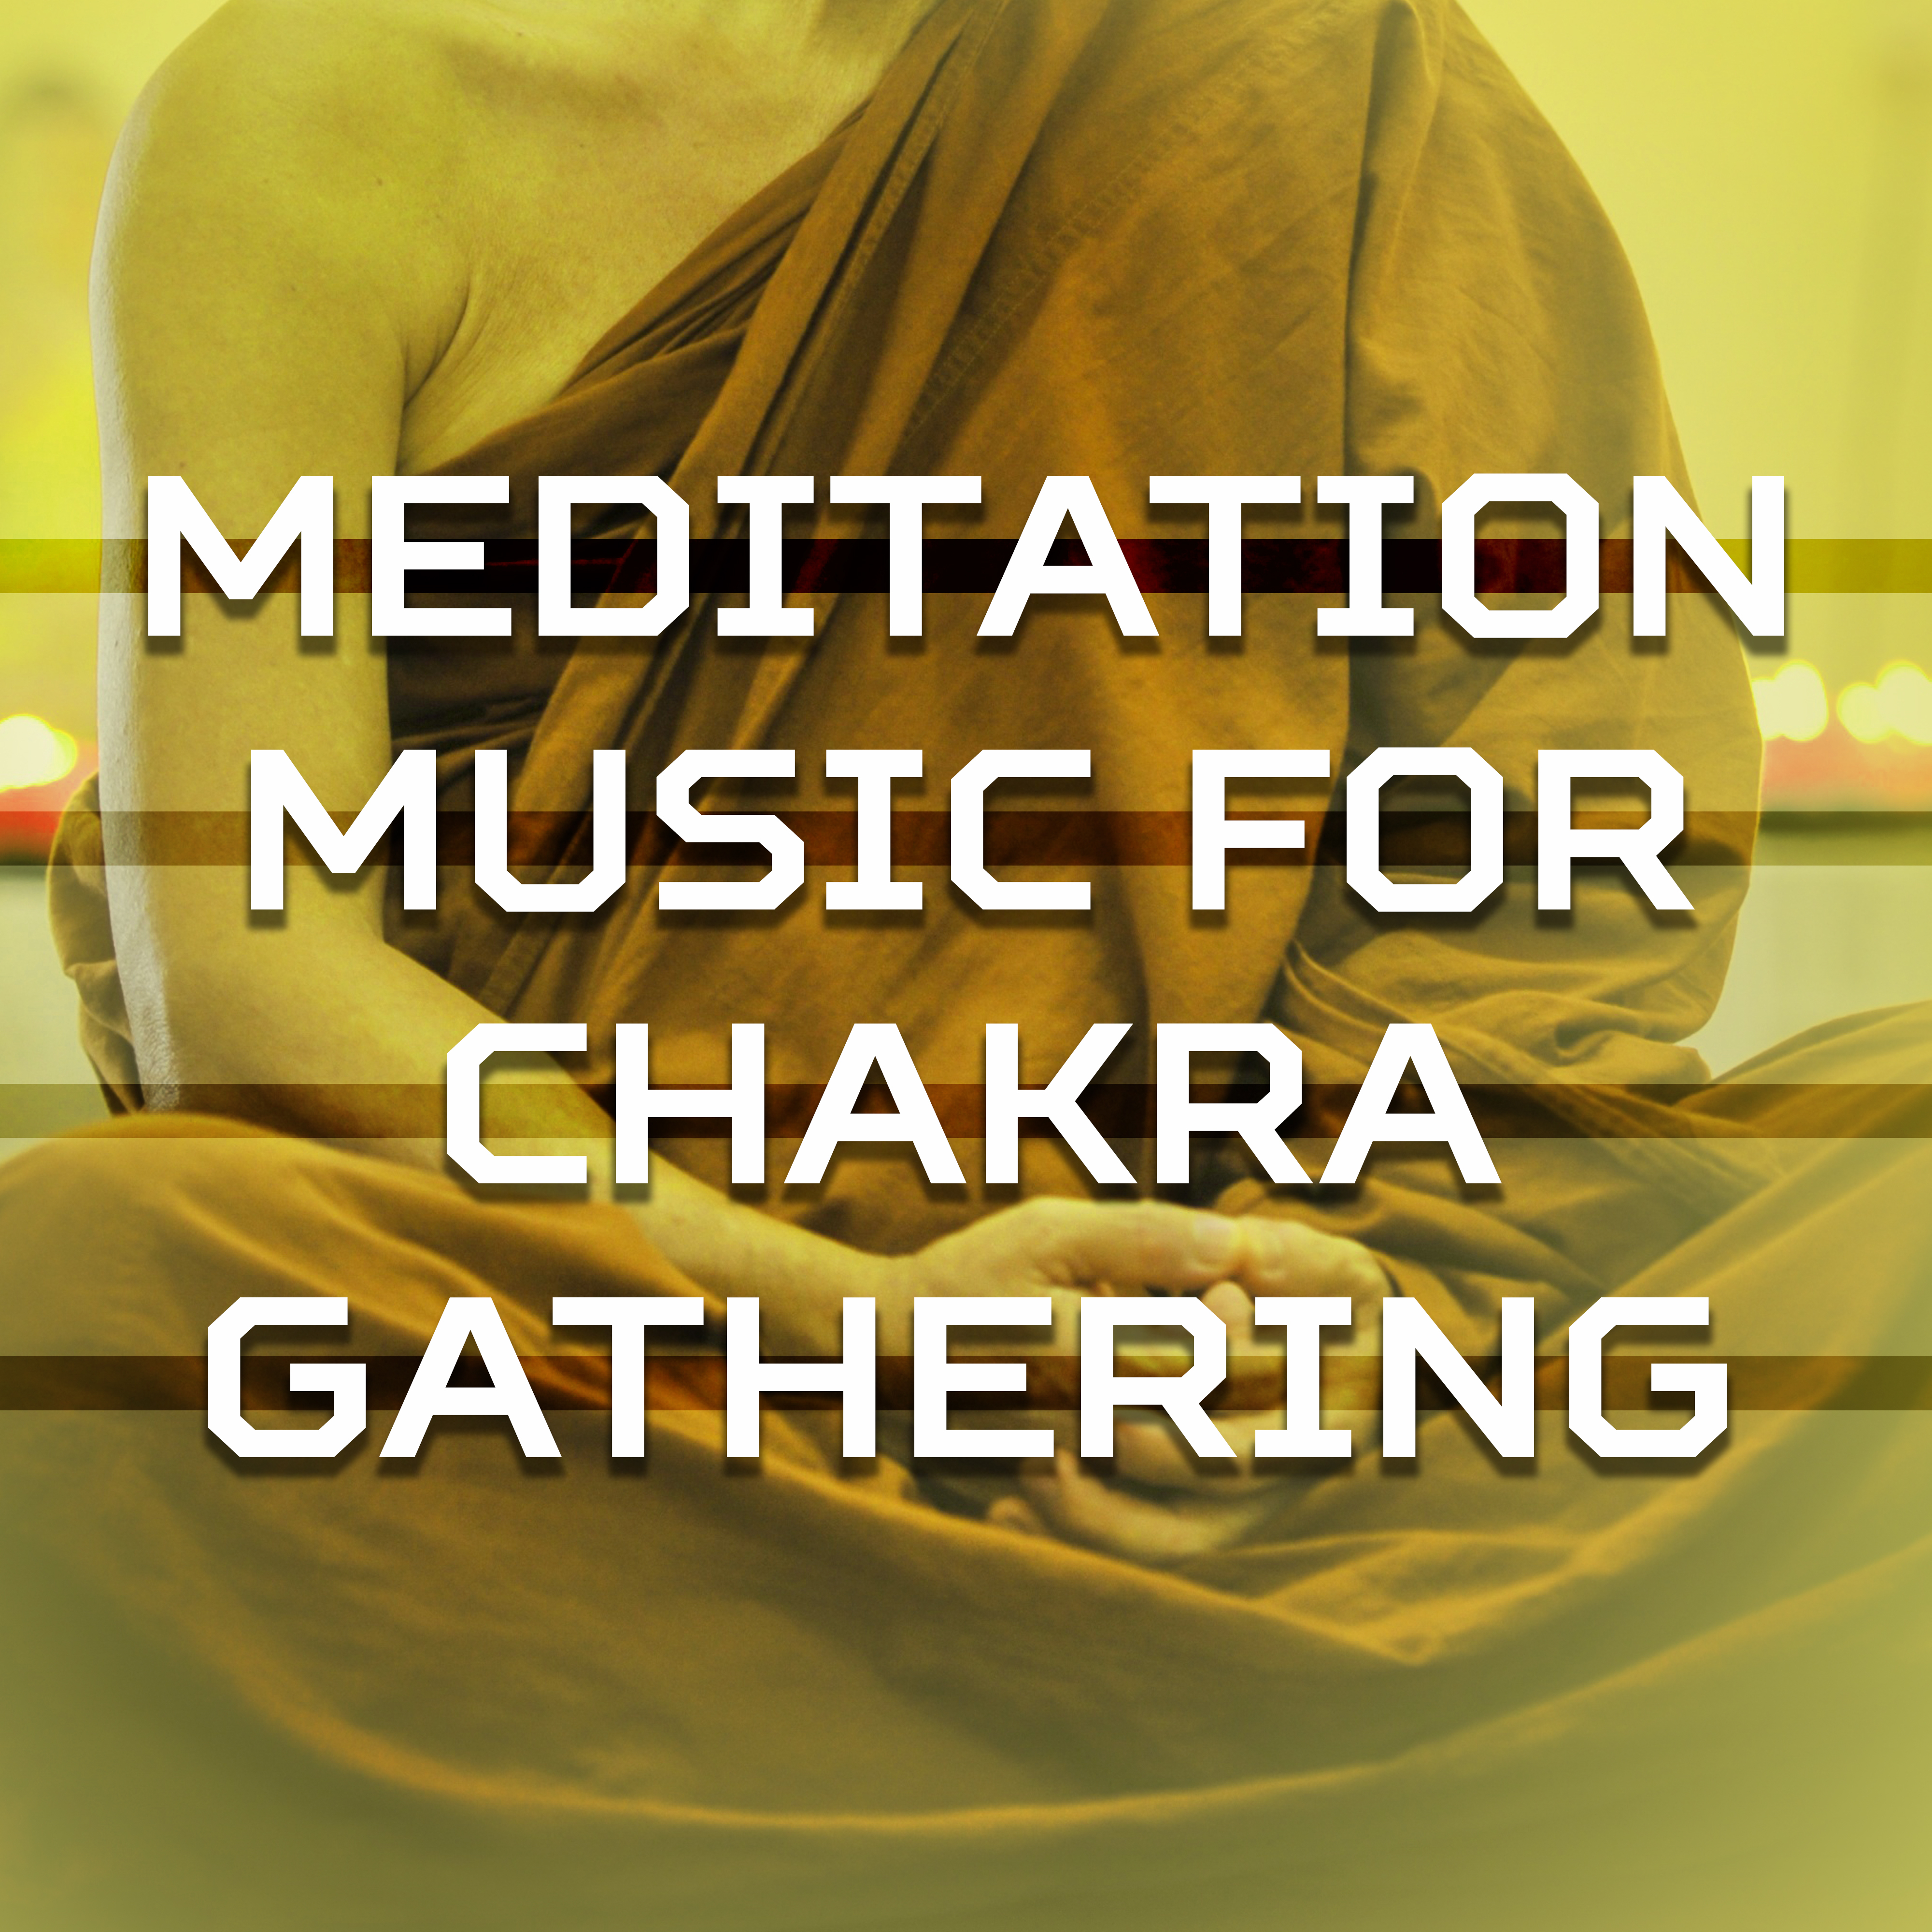 Meditation Music for Chakra Gathering  Buddha Lounge, Yoga Relaxation, Stress Relief, New Age Meditation